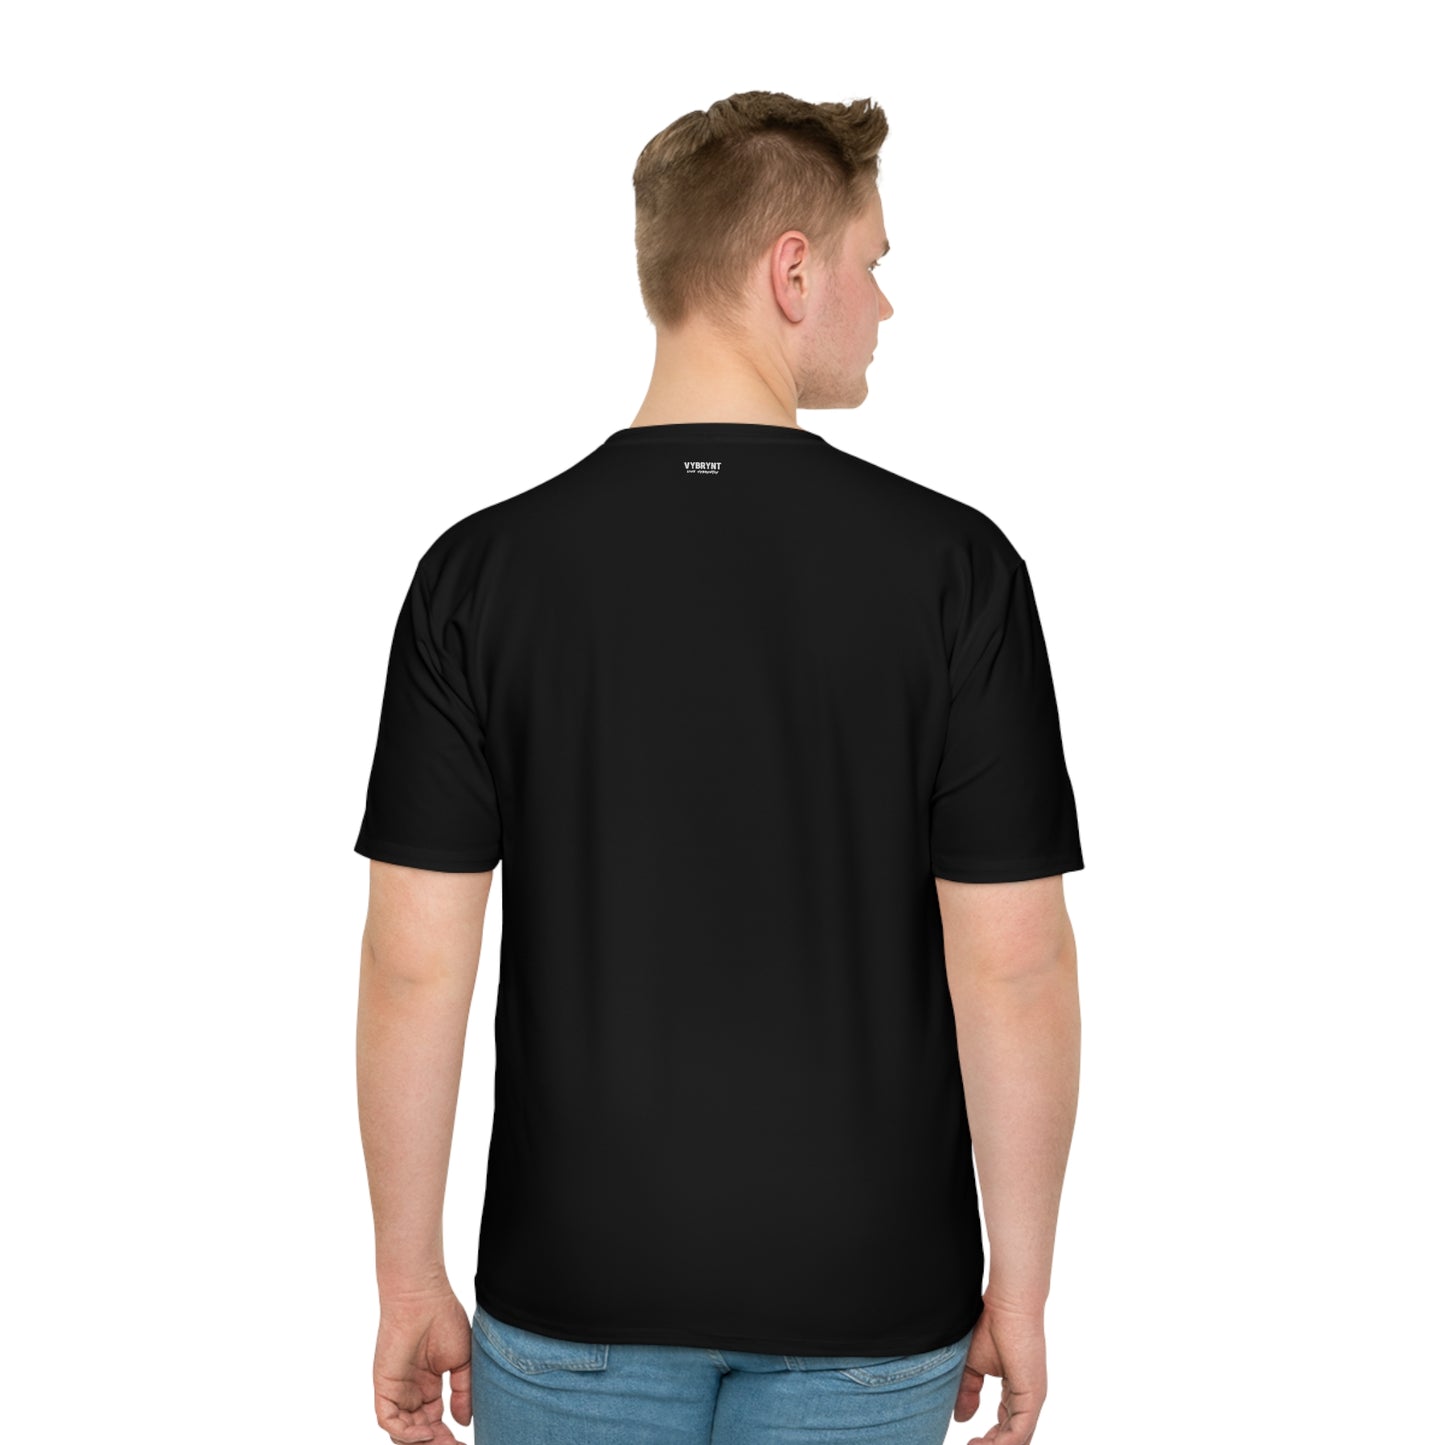 THX1138  Men's Black T-shirt